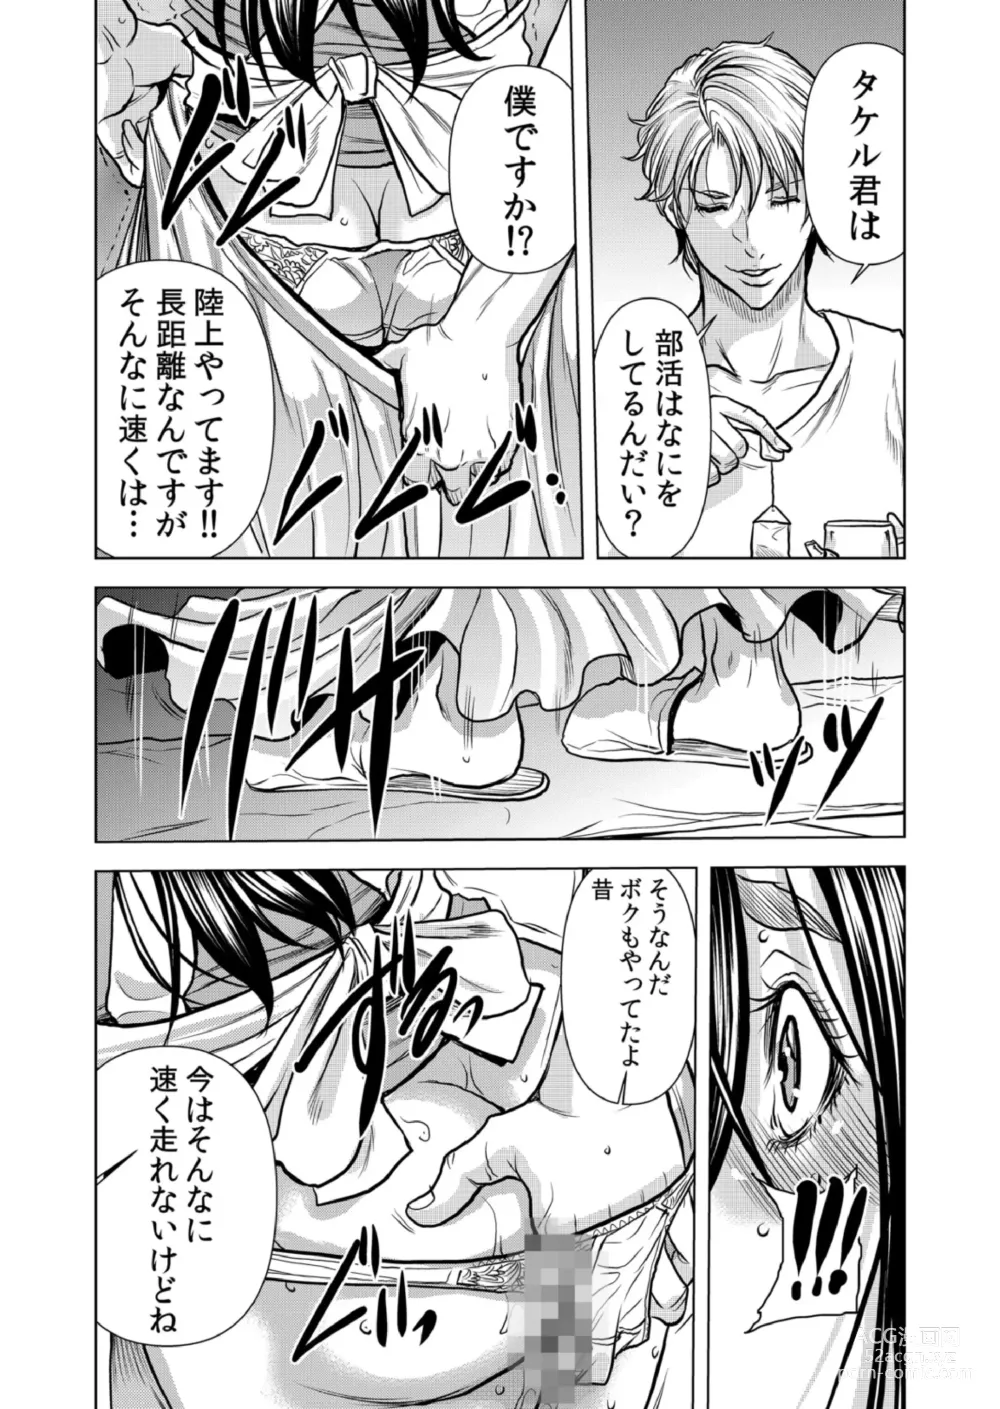 Page 7 of manga Mamasan,yobai ha OK desuka? VOL9